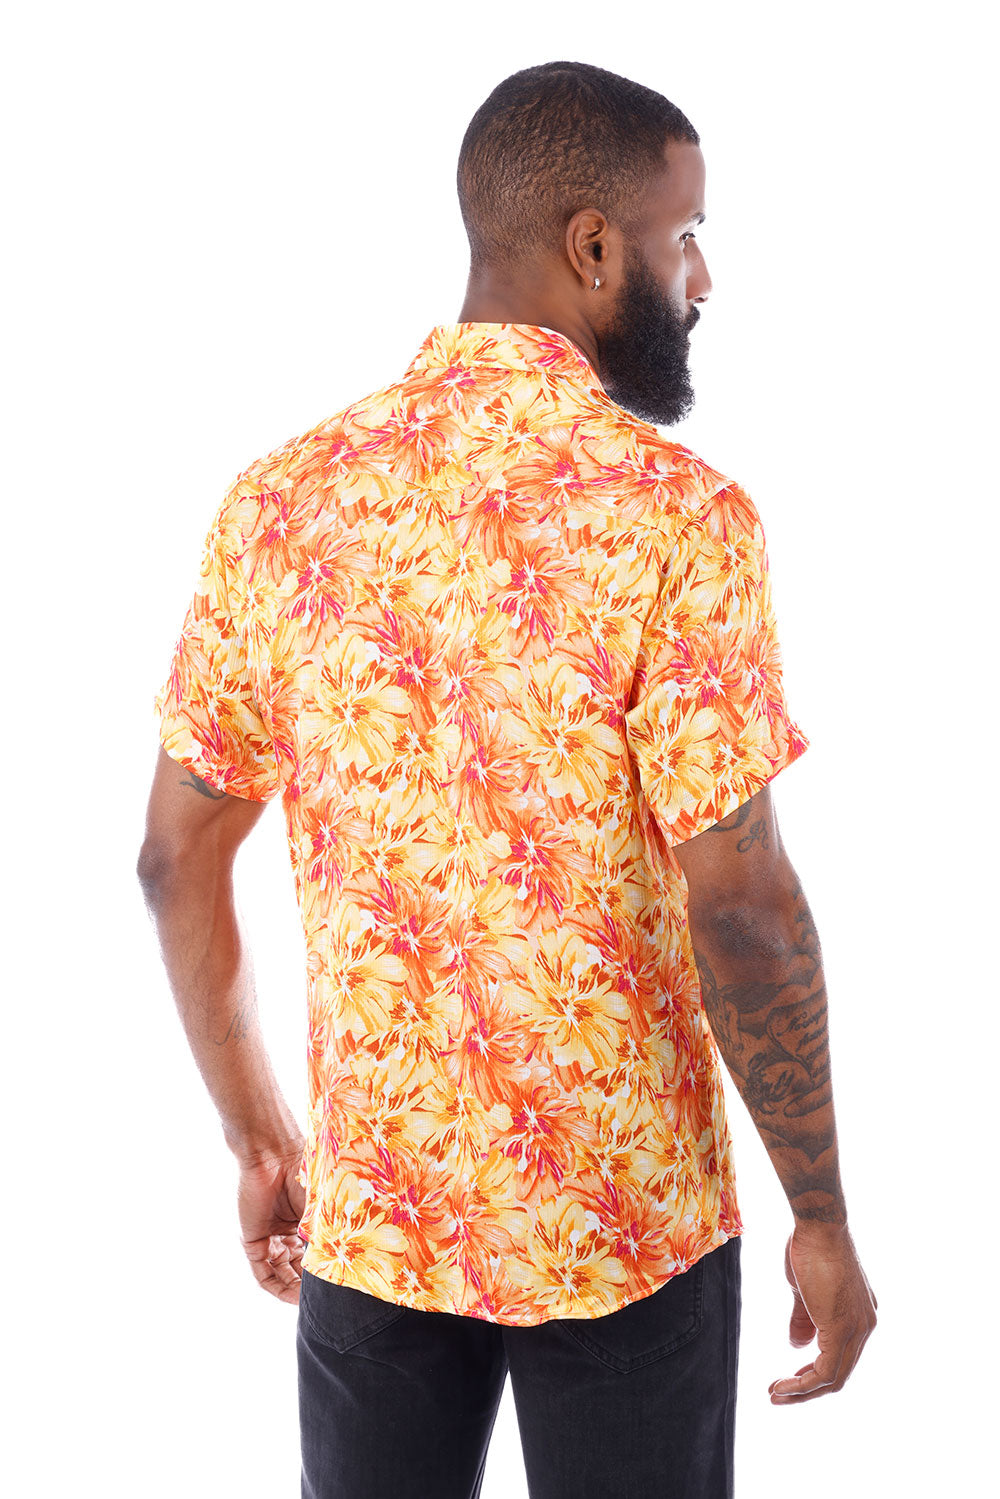 BARABAS Men's Floral Button Down Short Sleeve Shirts 4SST16 Orange